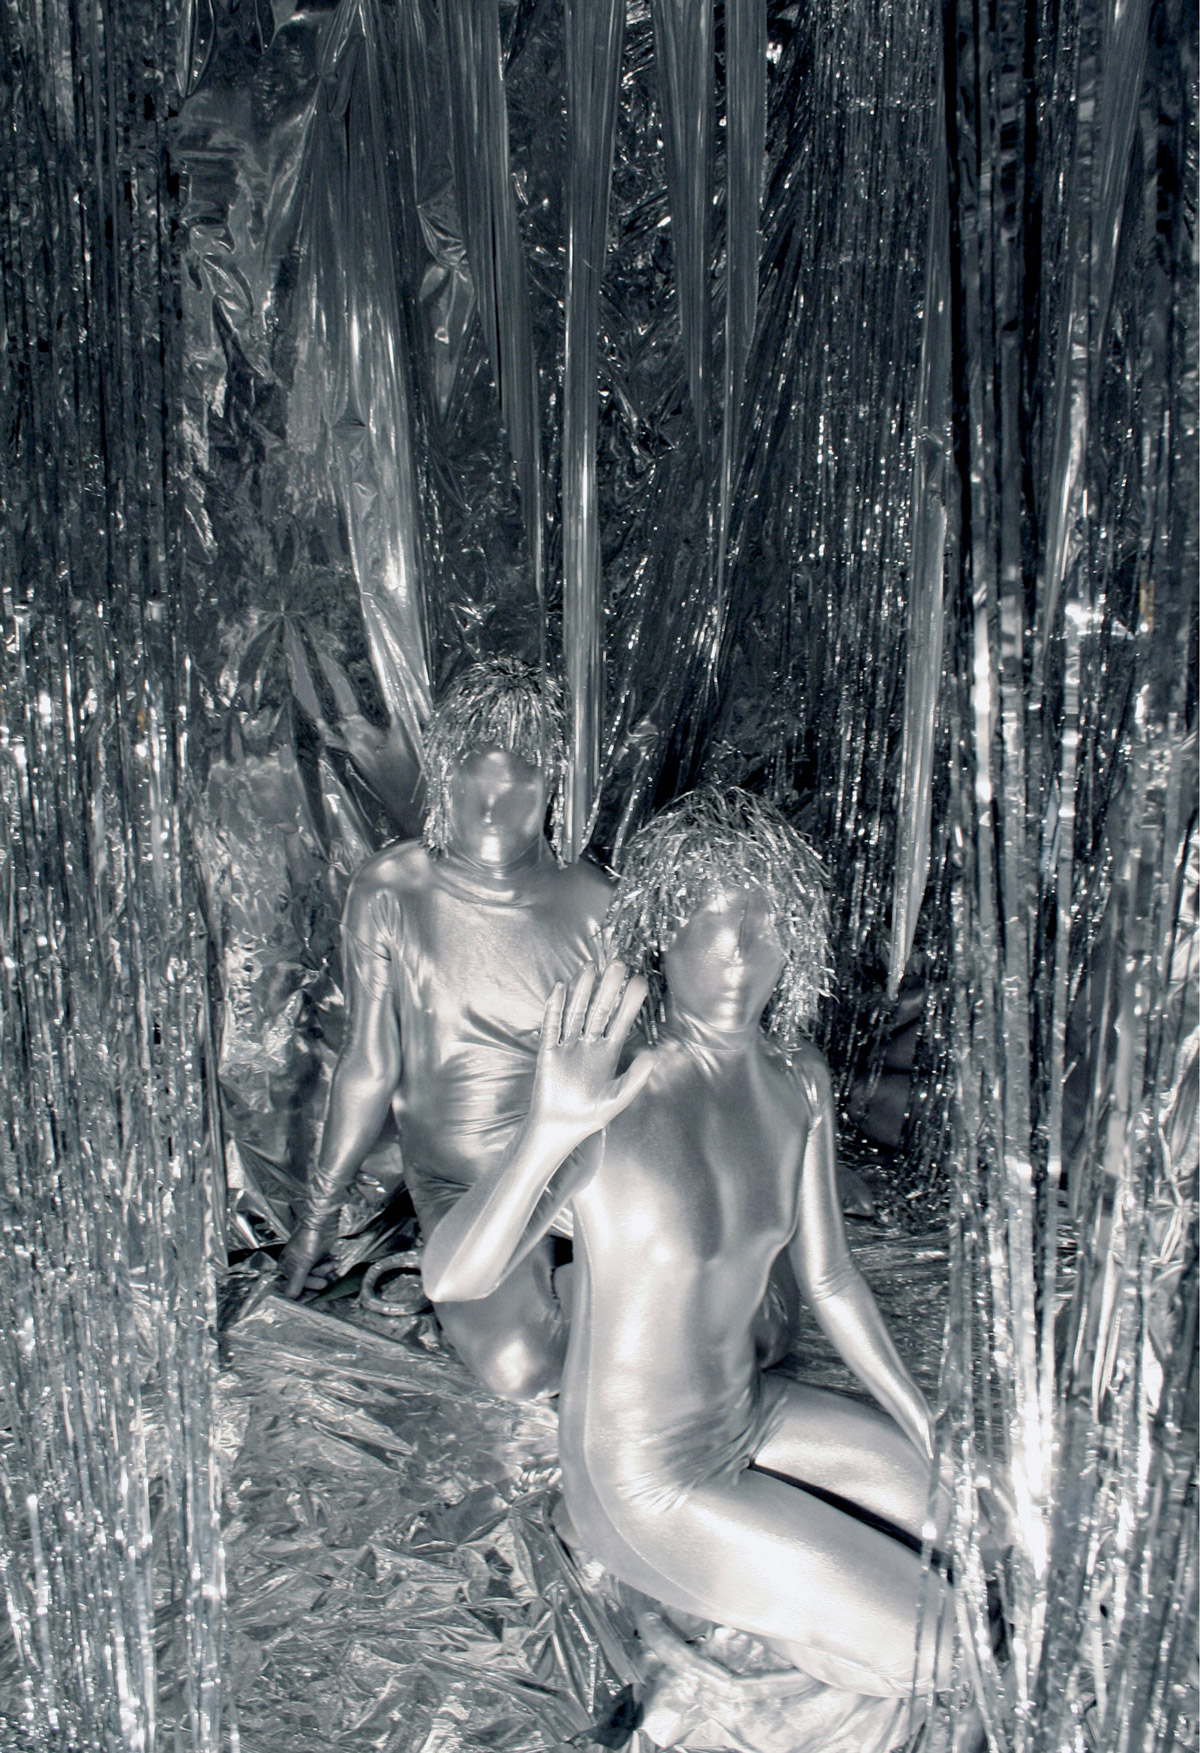 A photograph of an all silver art installation. 